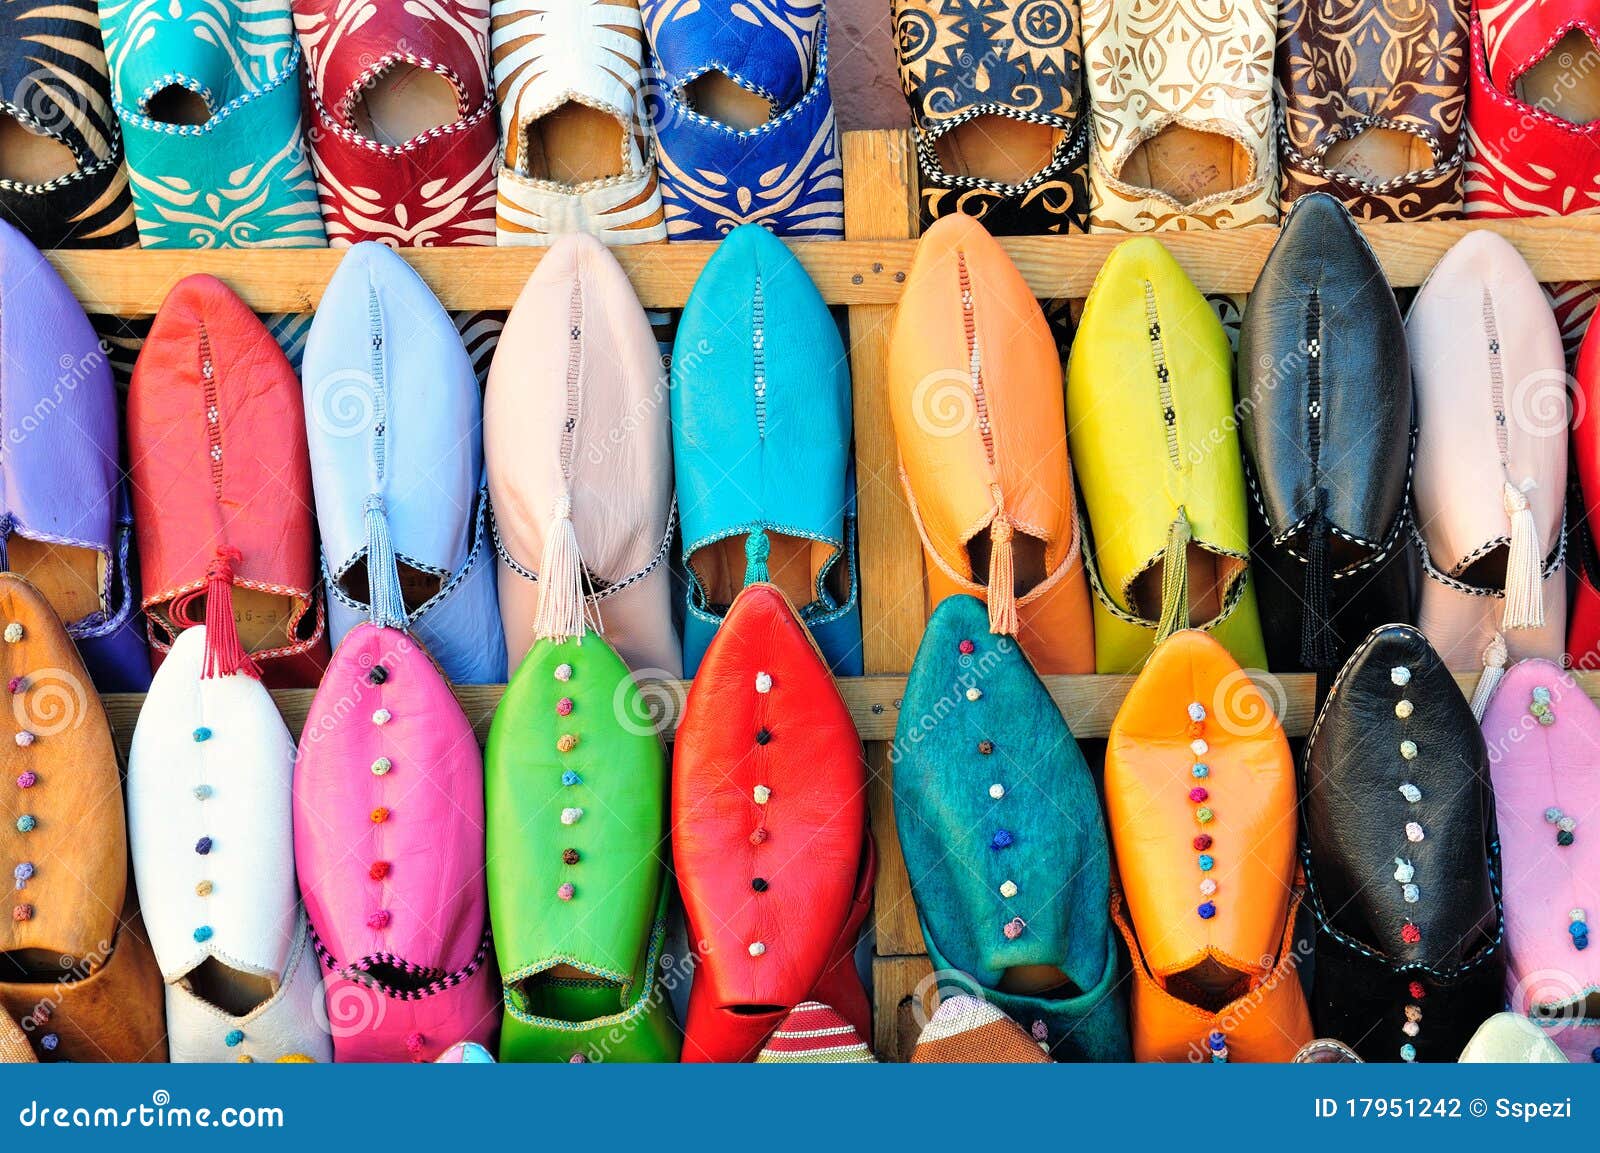 Zapatillas Babouche de lentejuelas marroquíes, Zapatillas